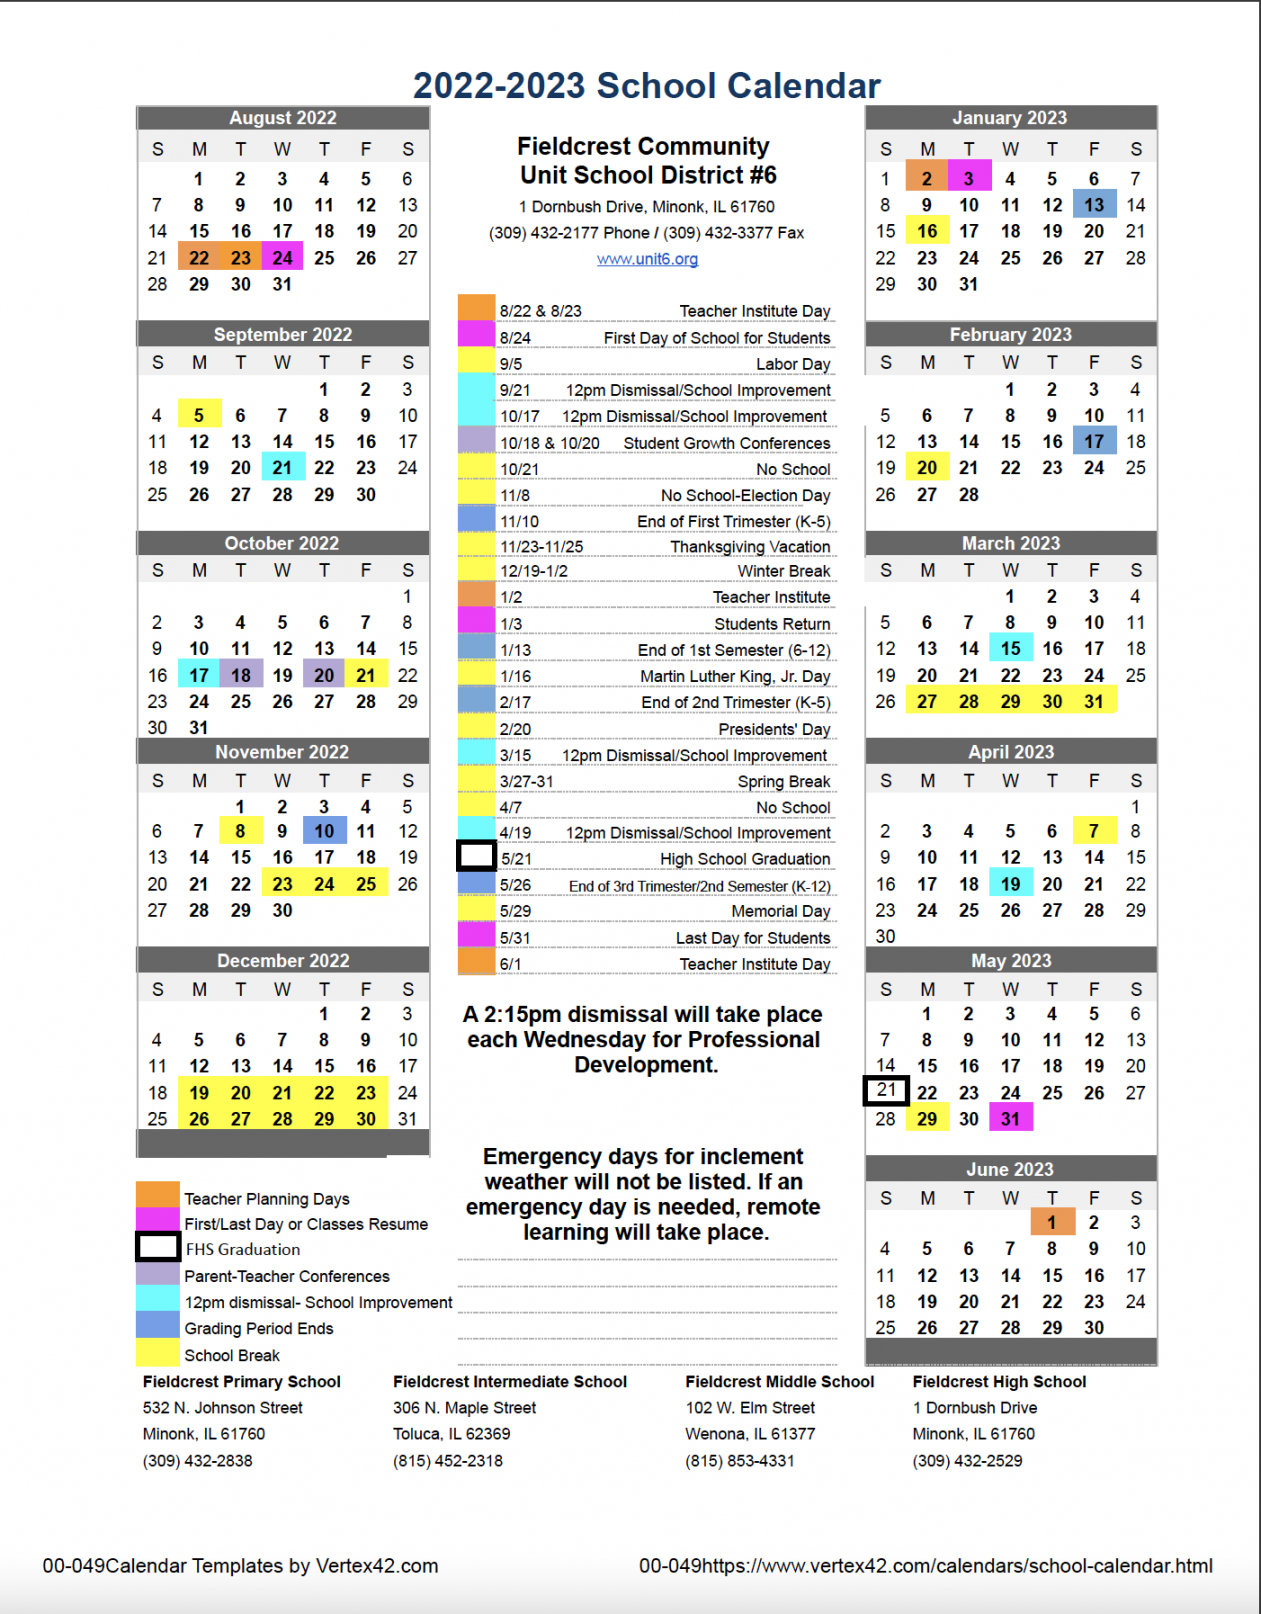 Annual School Calendar - Fieldcrest Community Unit School District #